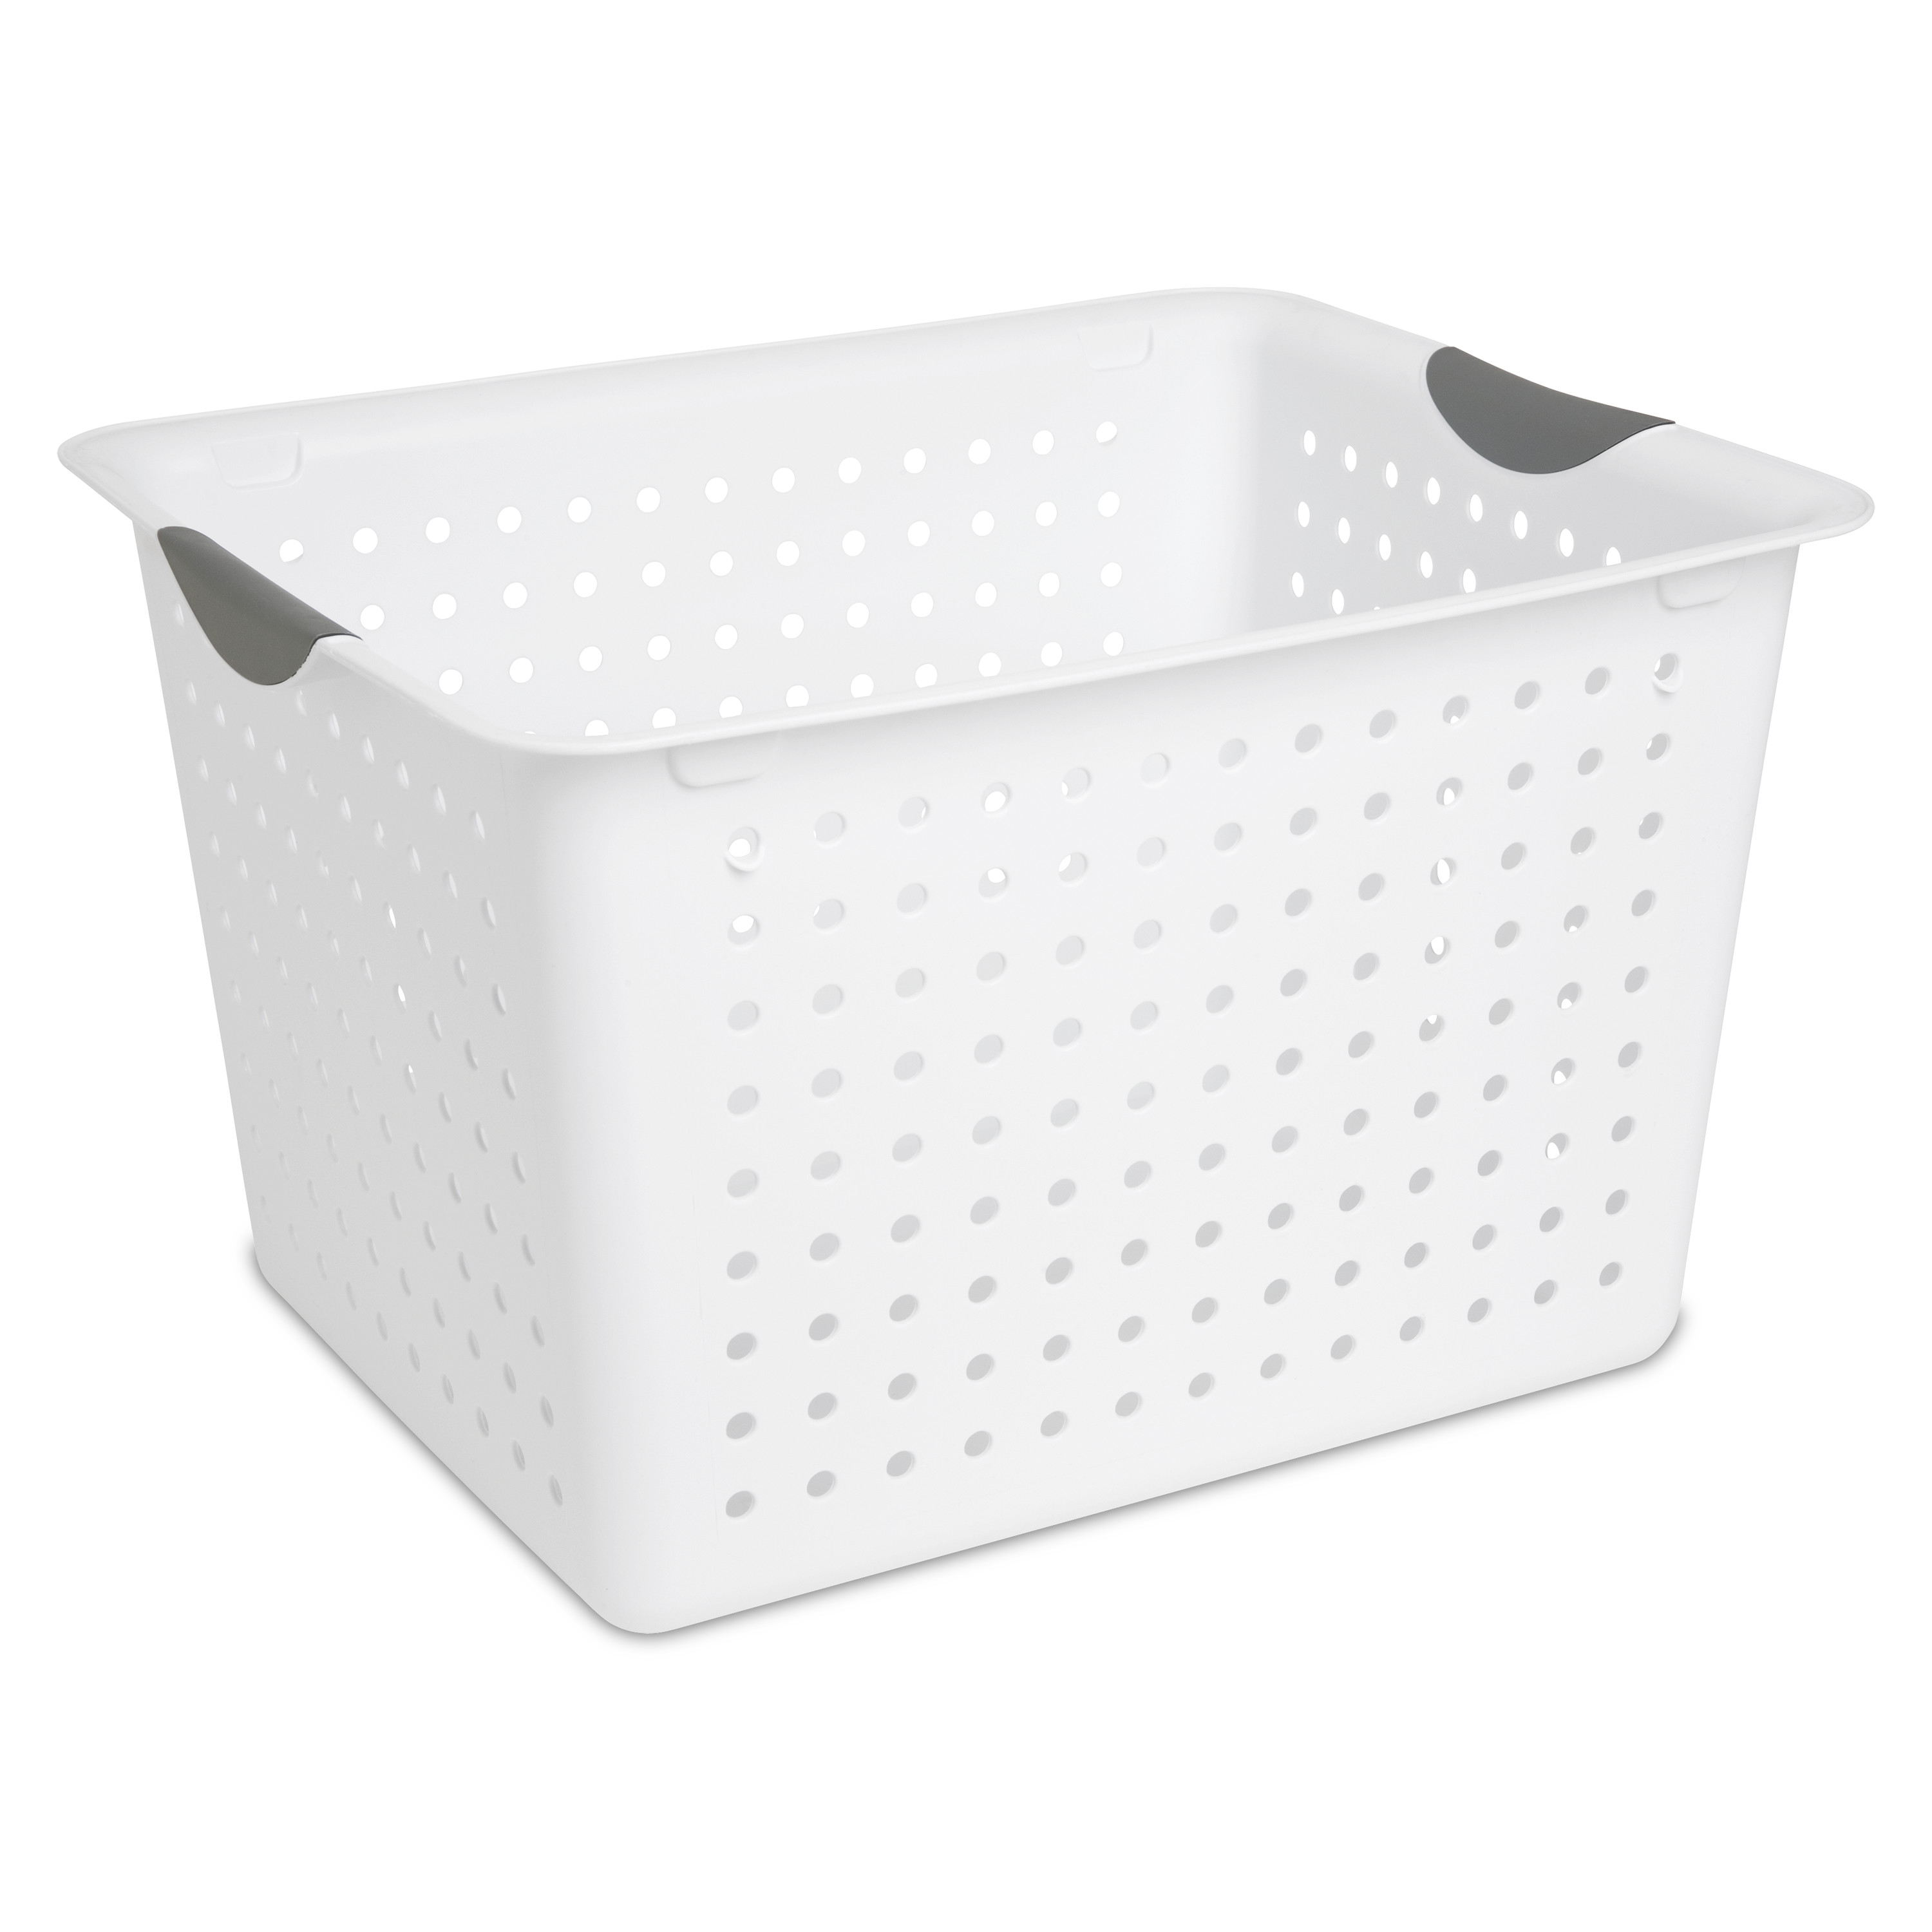 Sterilite Deep Ultra™ Basket Plastic, White - image 1 of 7